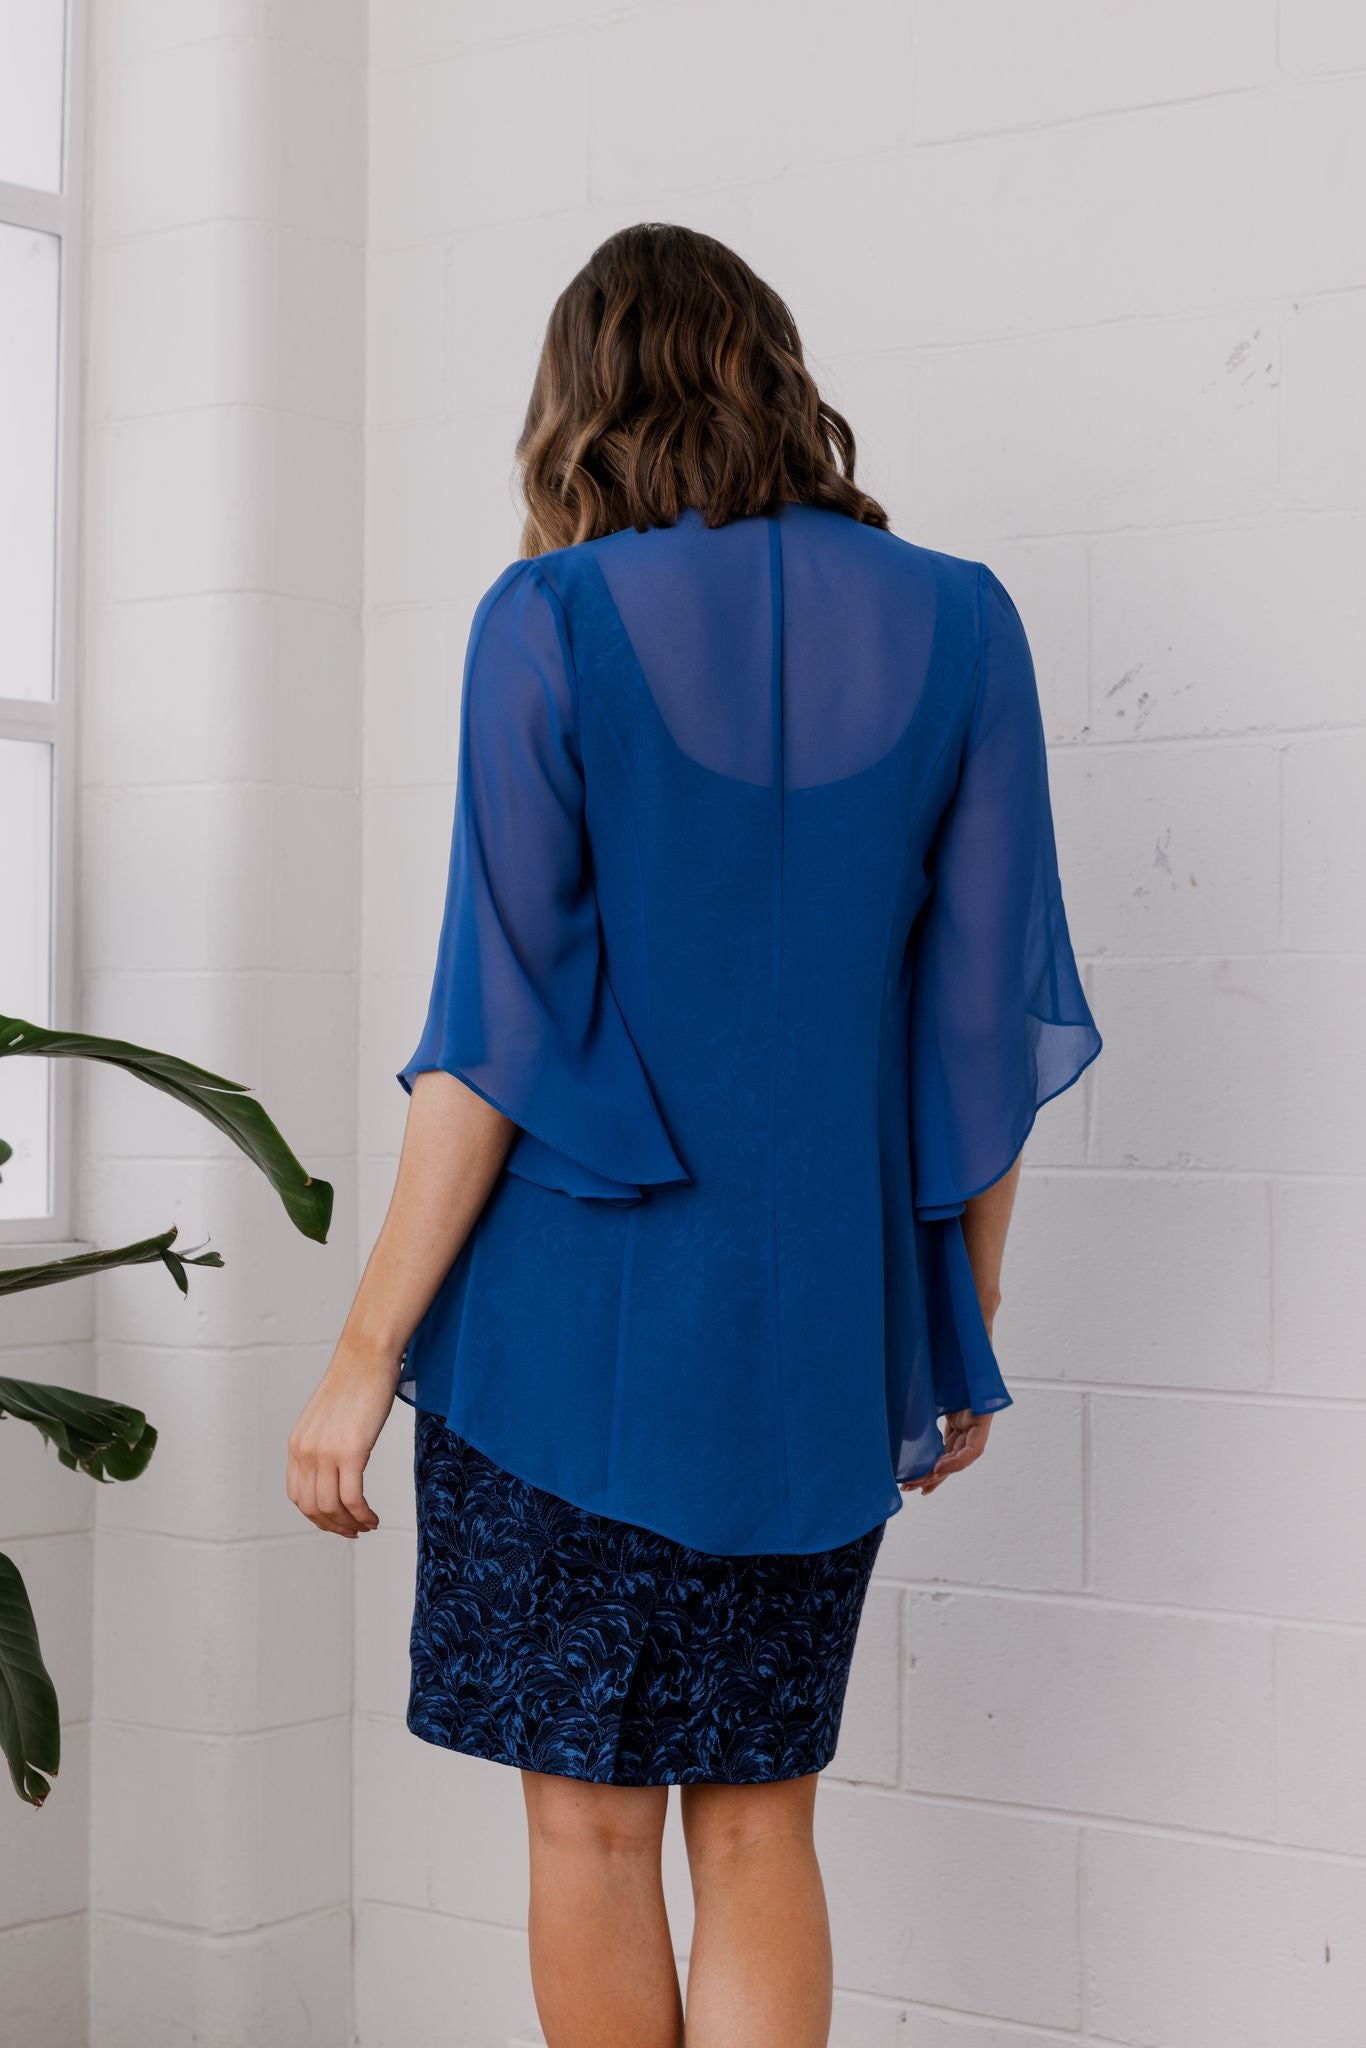 Tania Olsen Designs MO5 Leilani Dress & Jacket Set